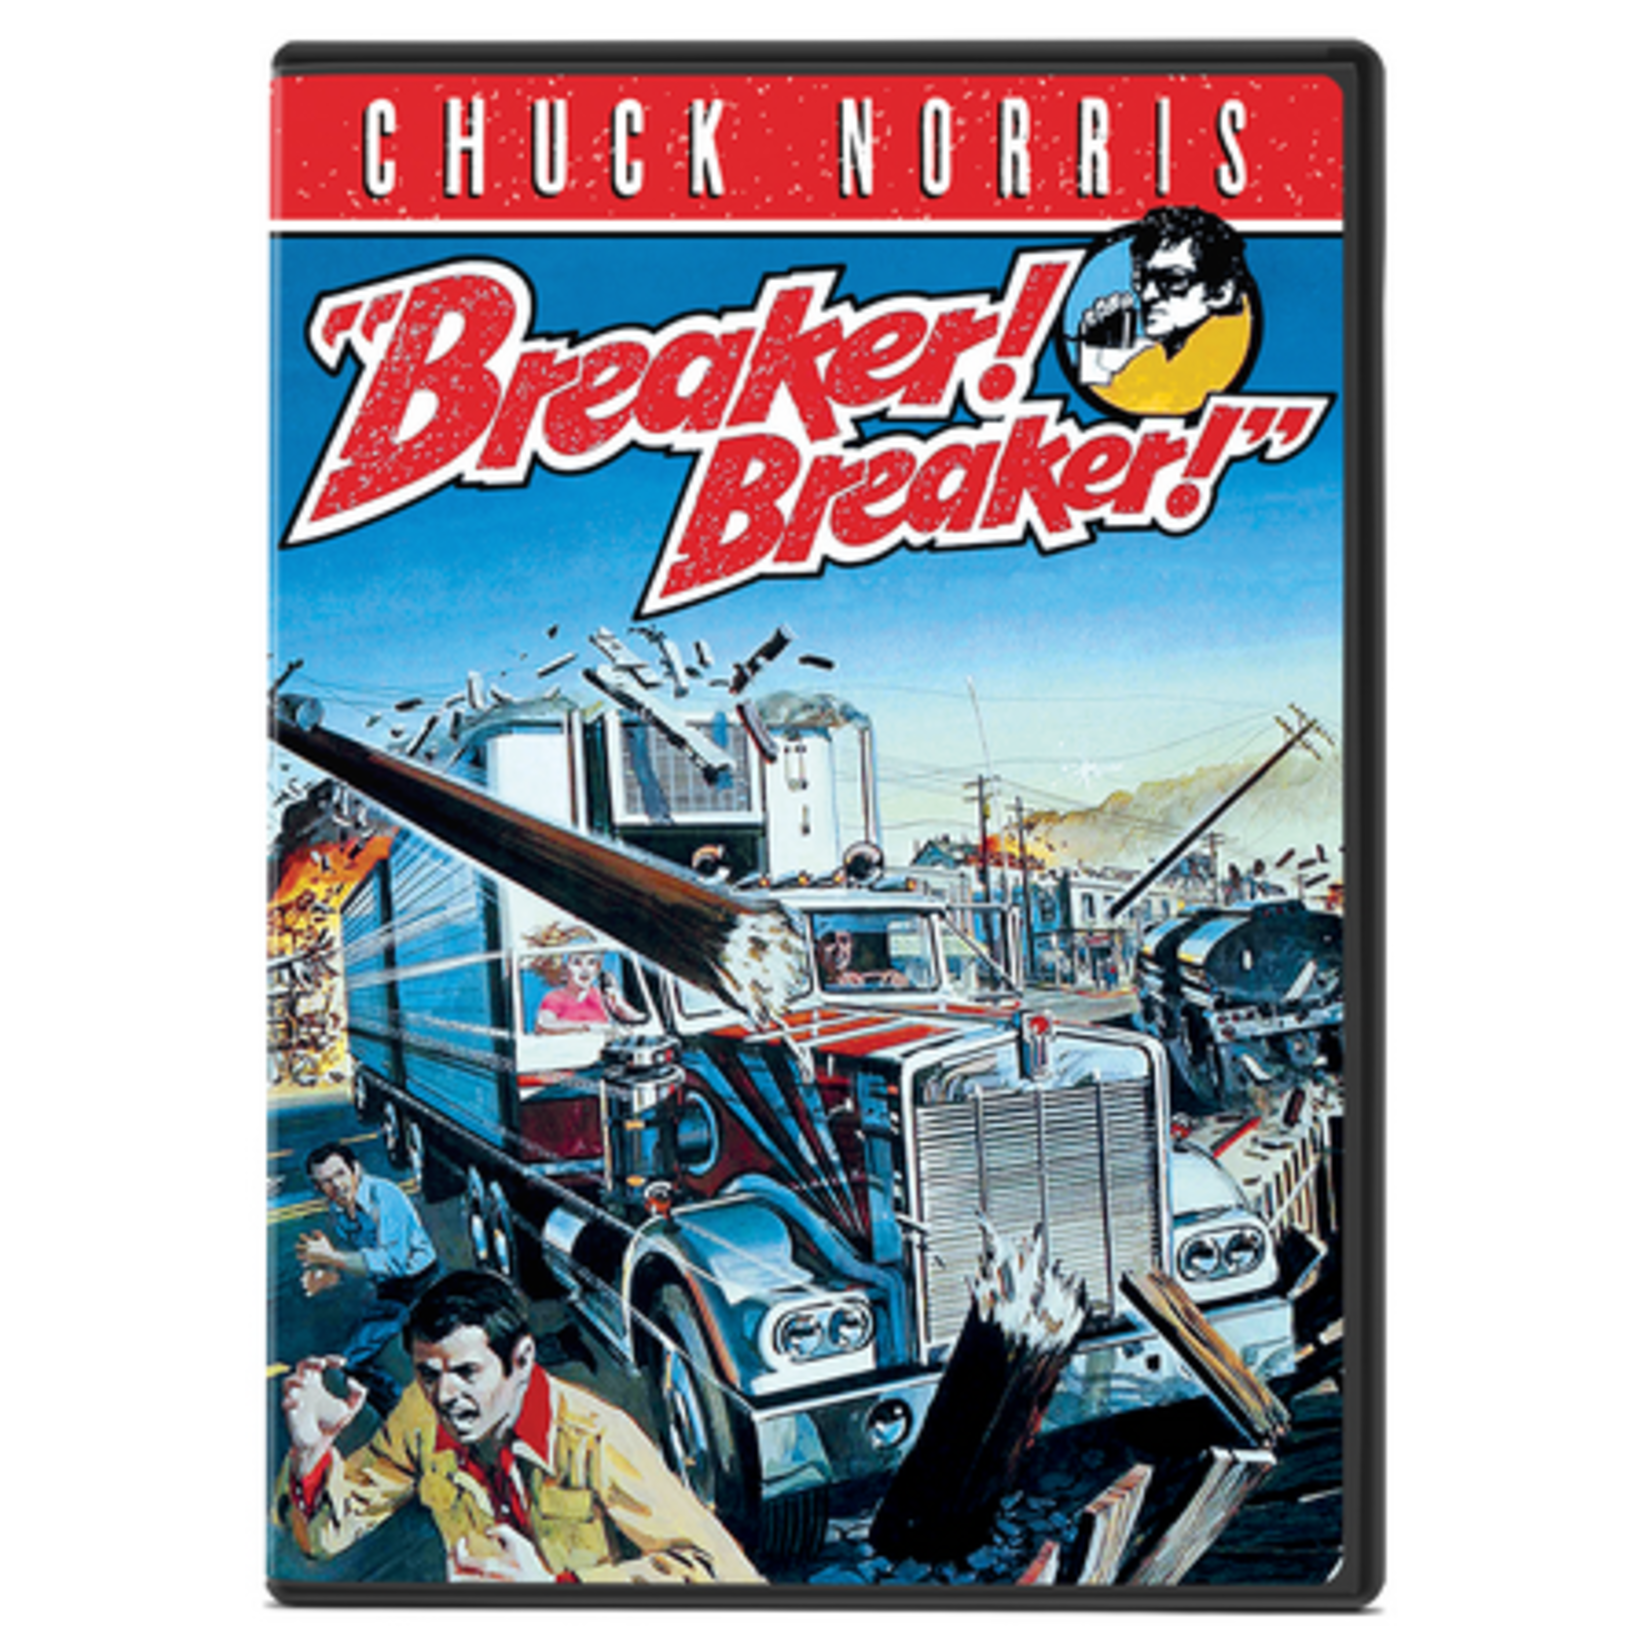 Breaker! Breaker! (1977) [DVD]